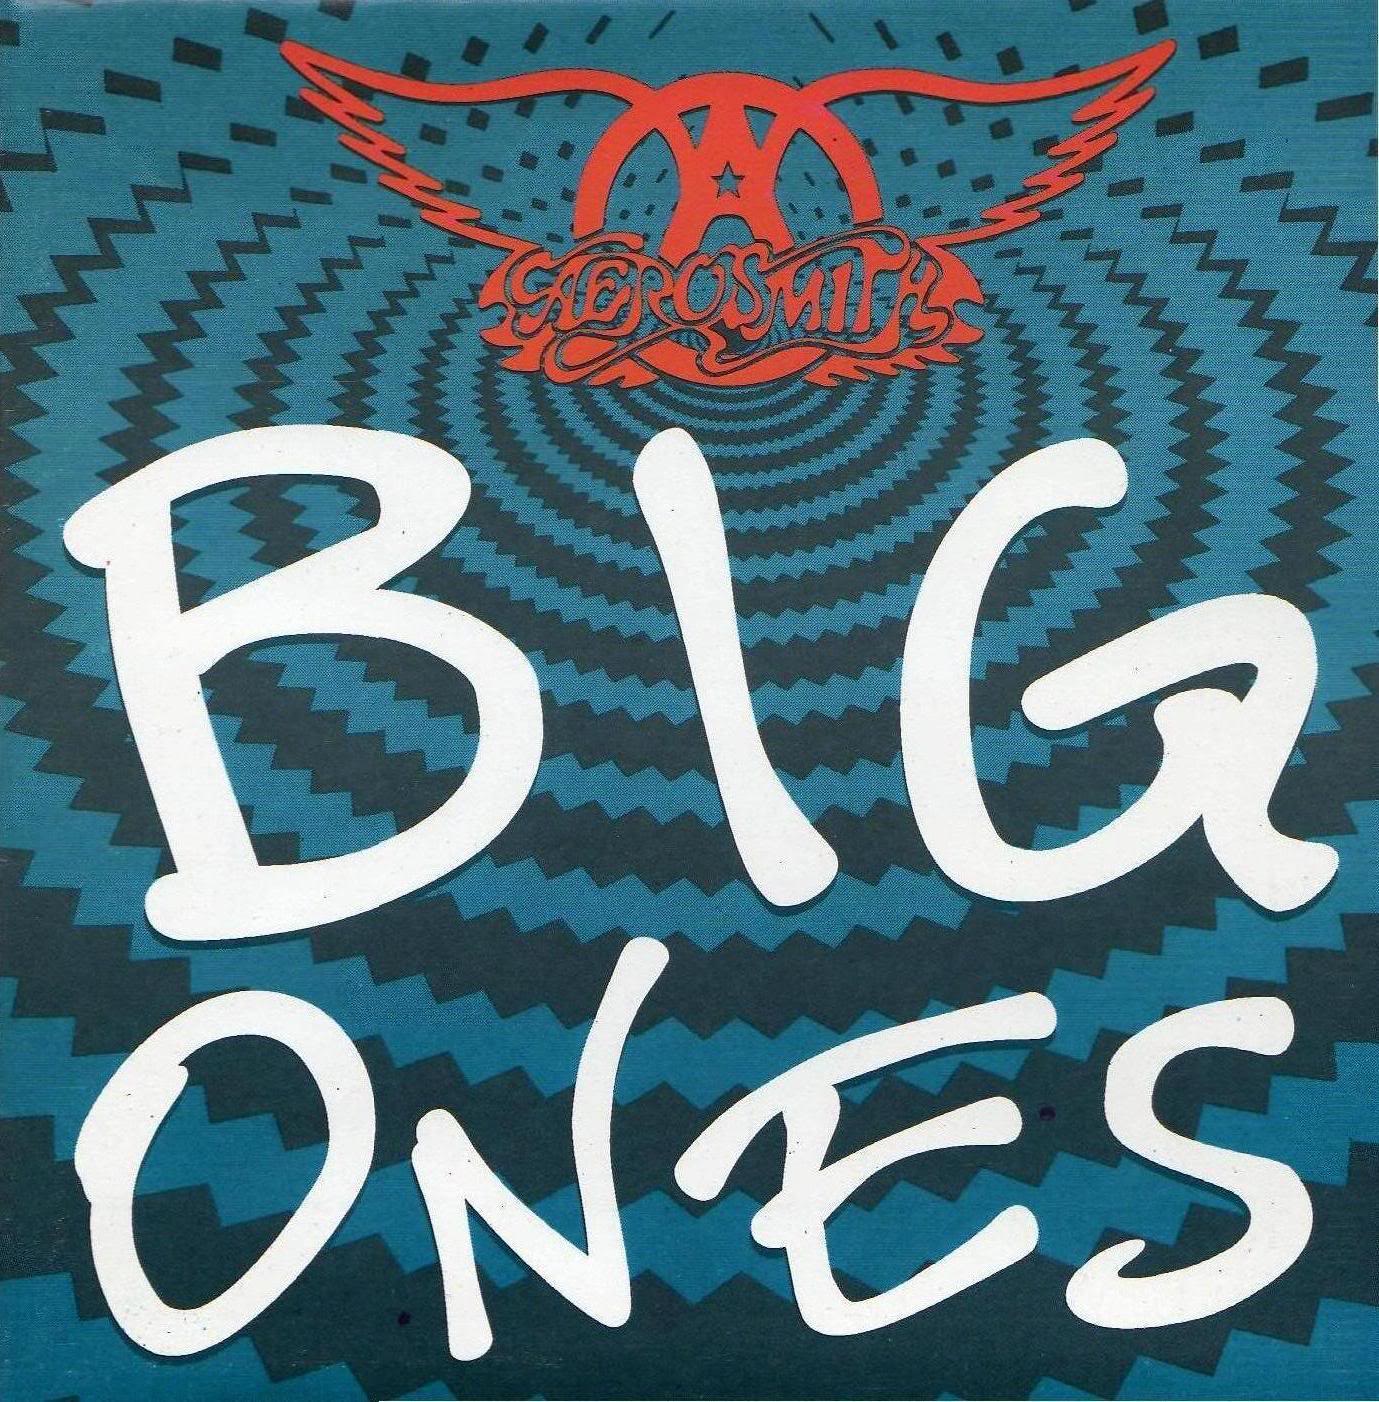 CD Aerosmith - Big ones